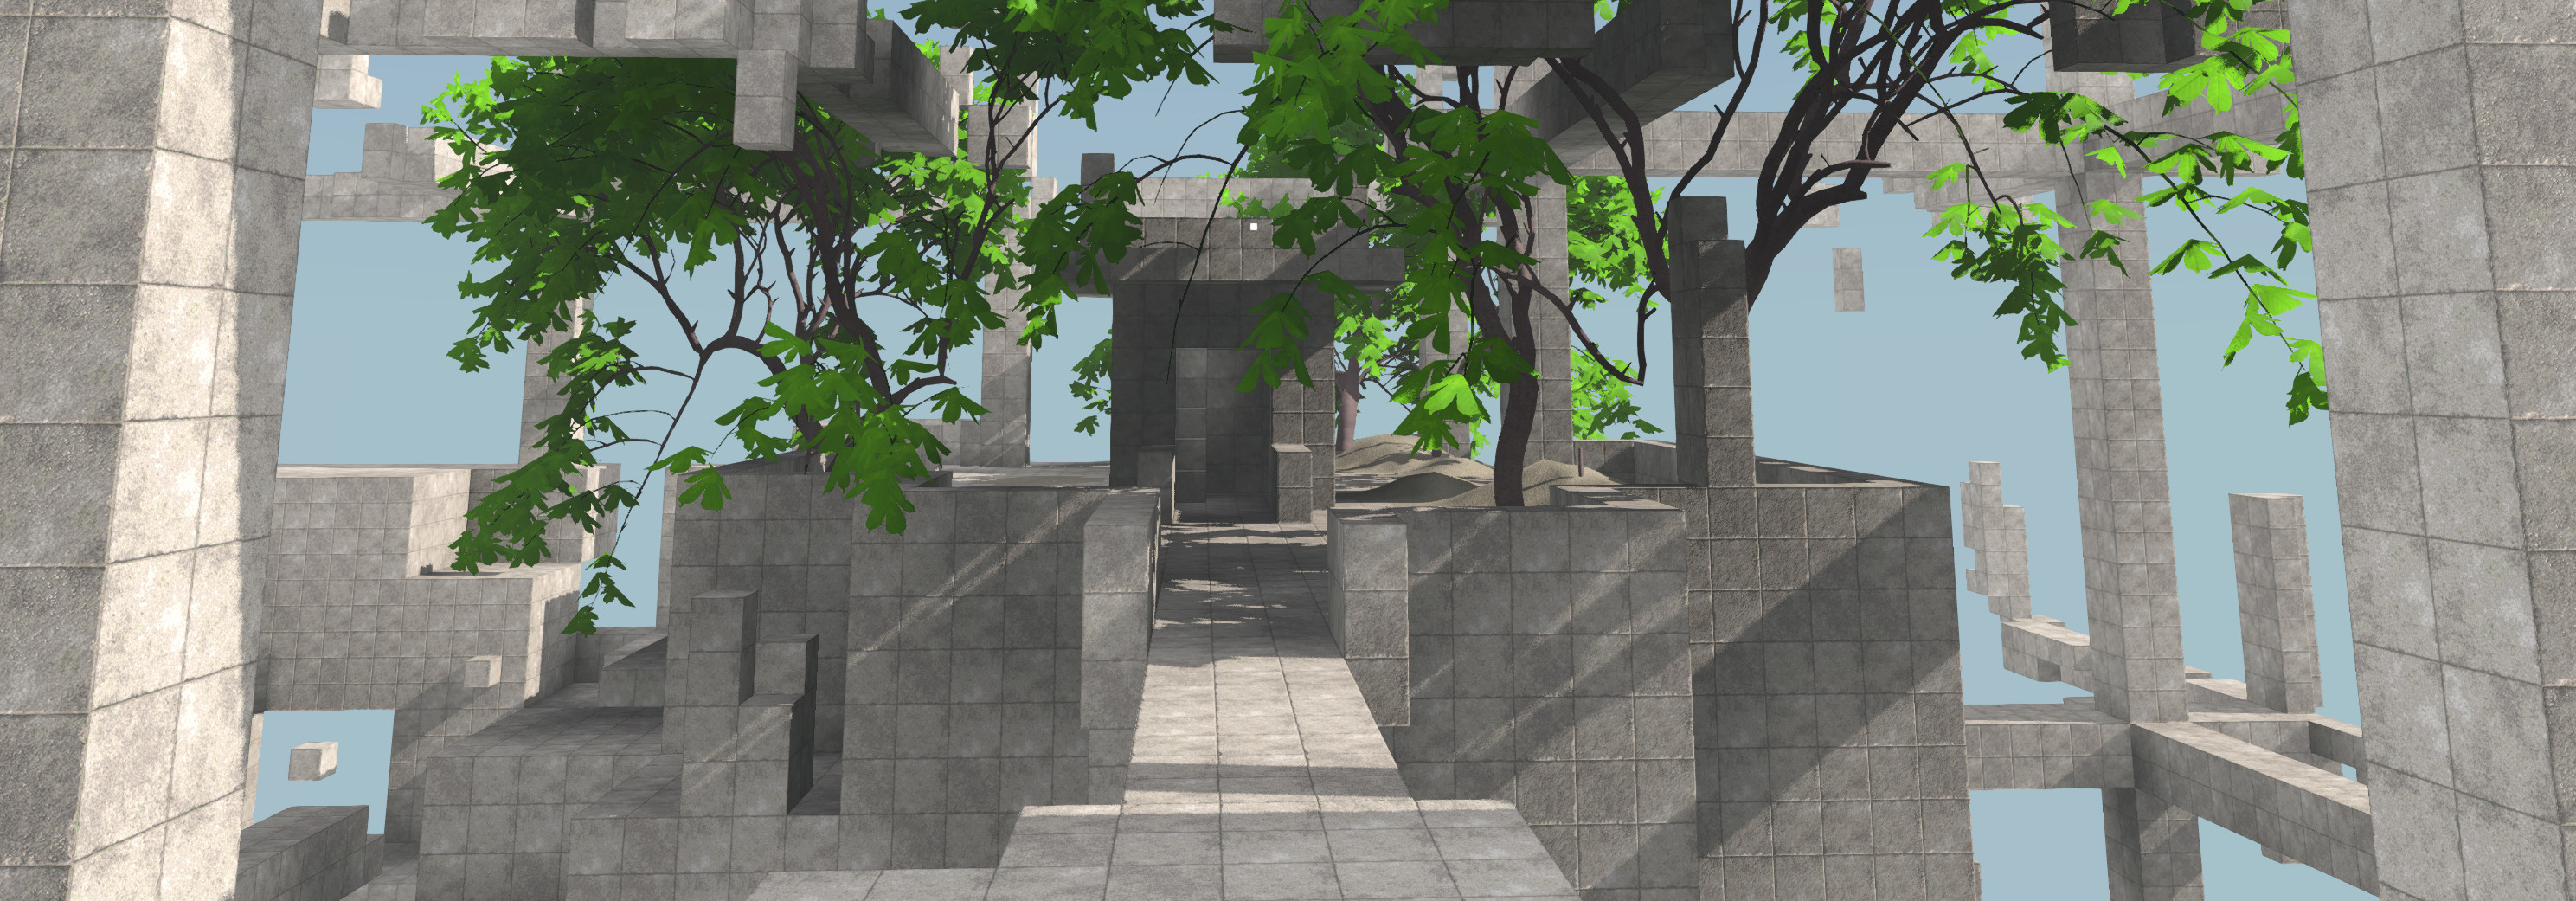 screenshot: buildings & trees